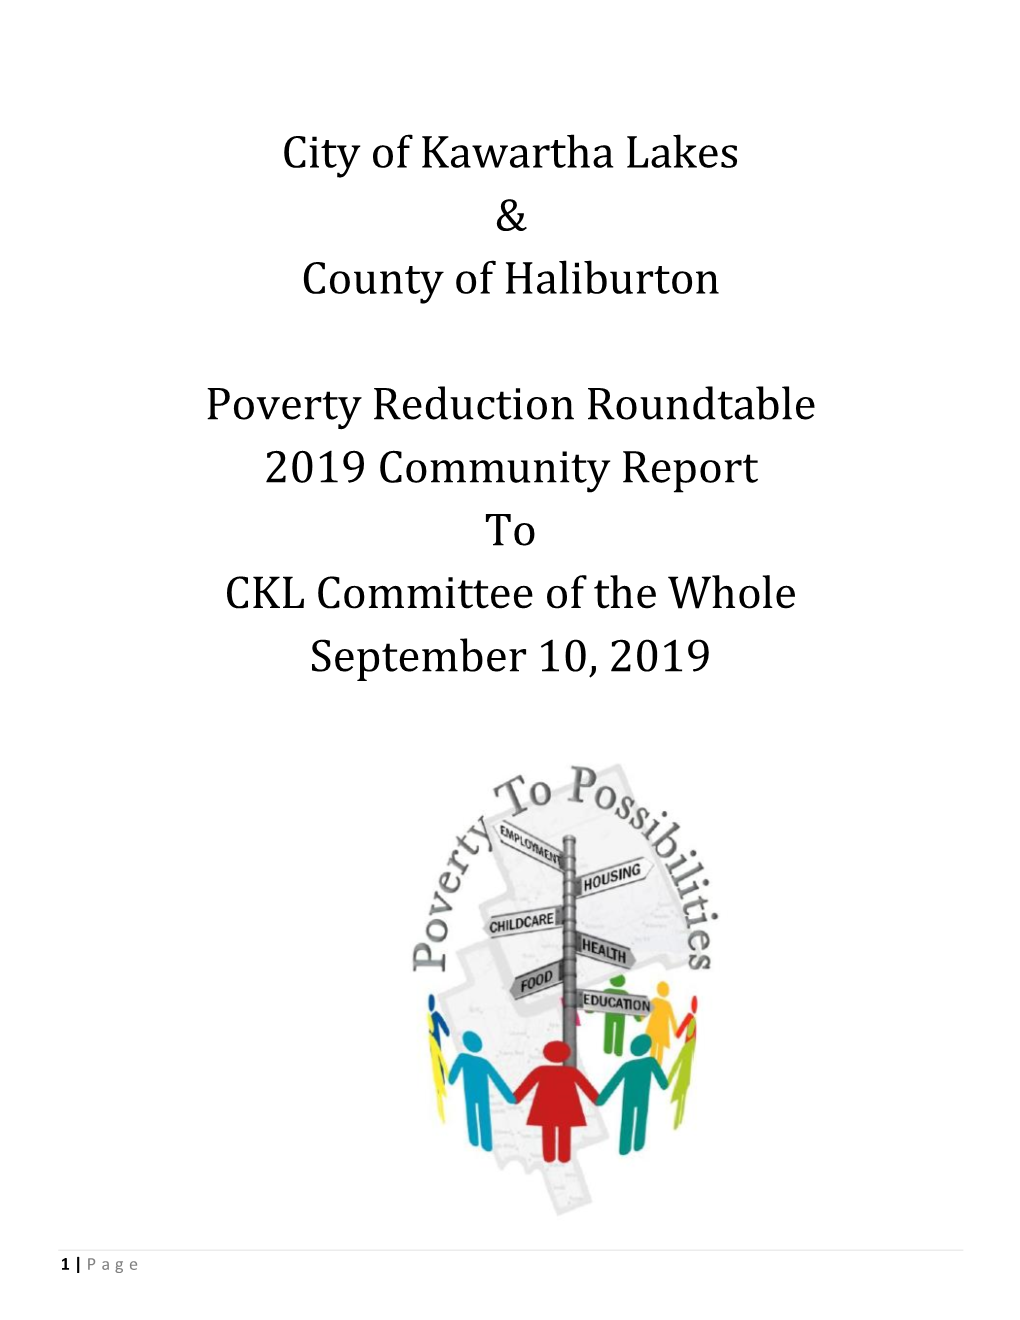 City of Kawartha Lakes & County of Haliburton Poverty Reduction